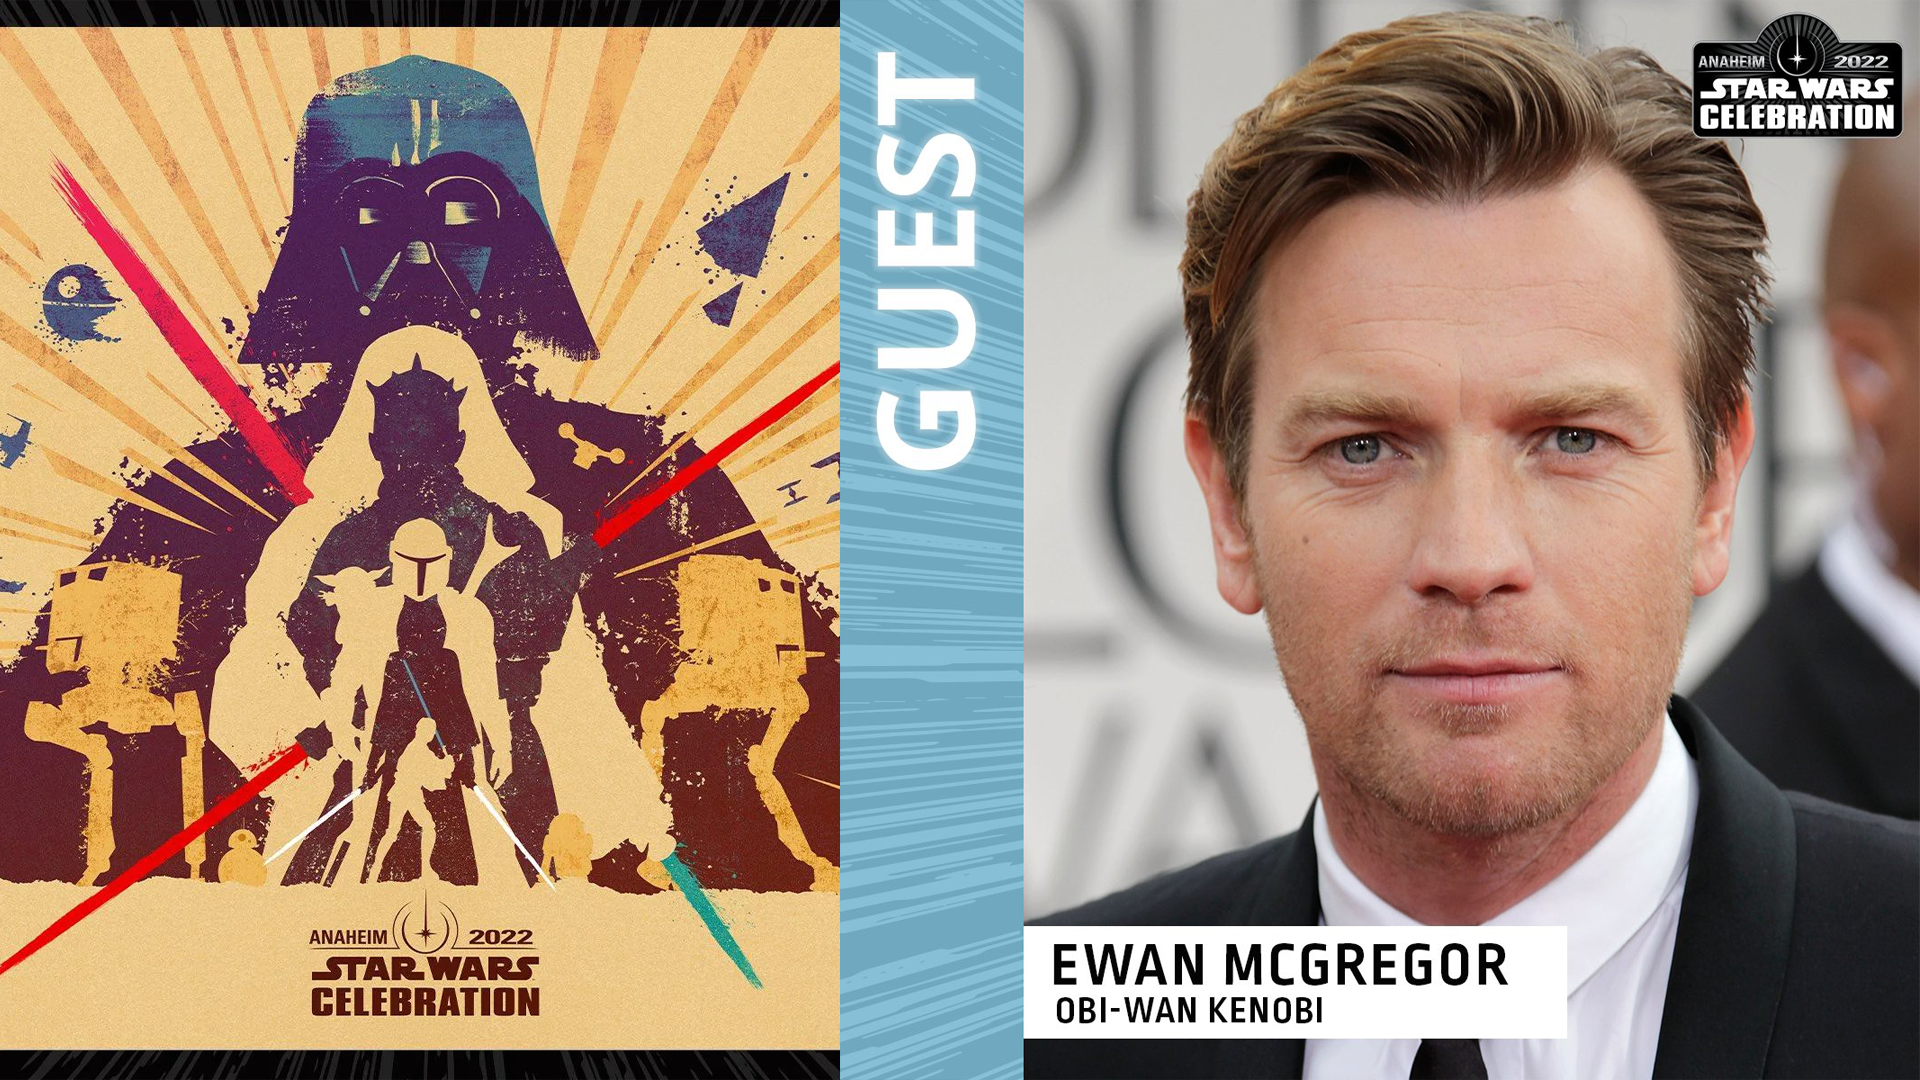 Ewan McGregor is coming to Star Wars Celebration